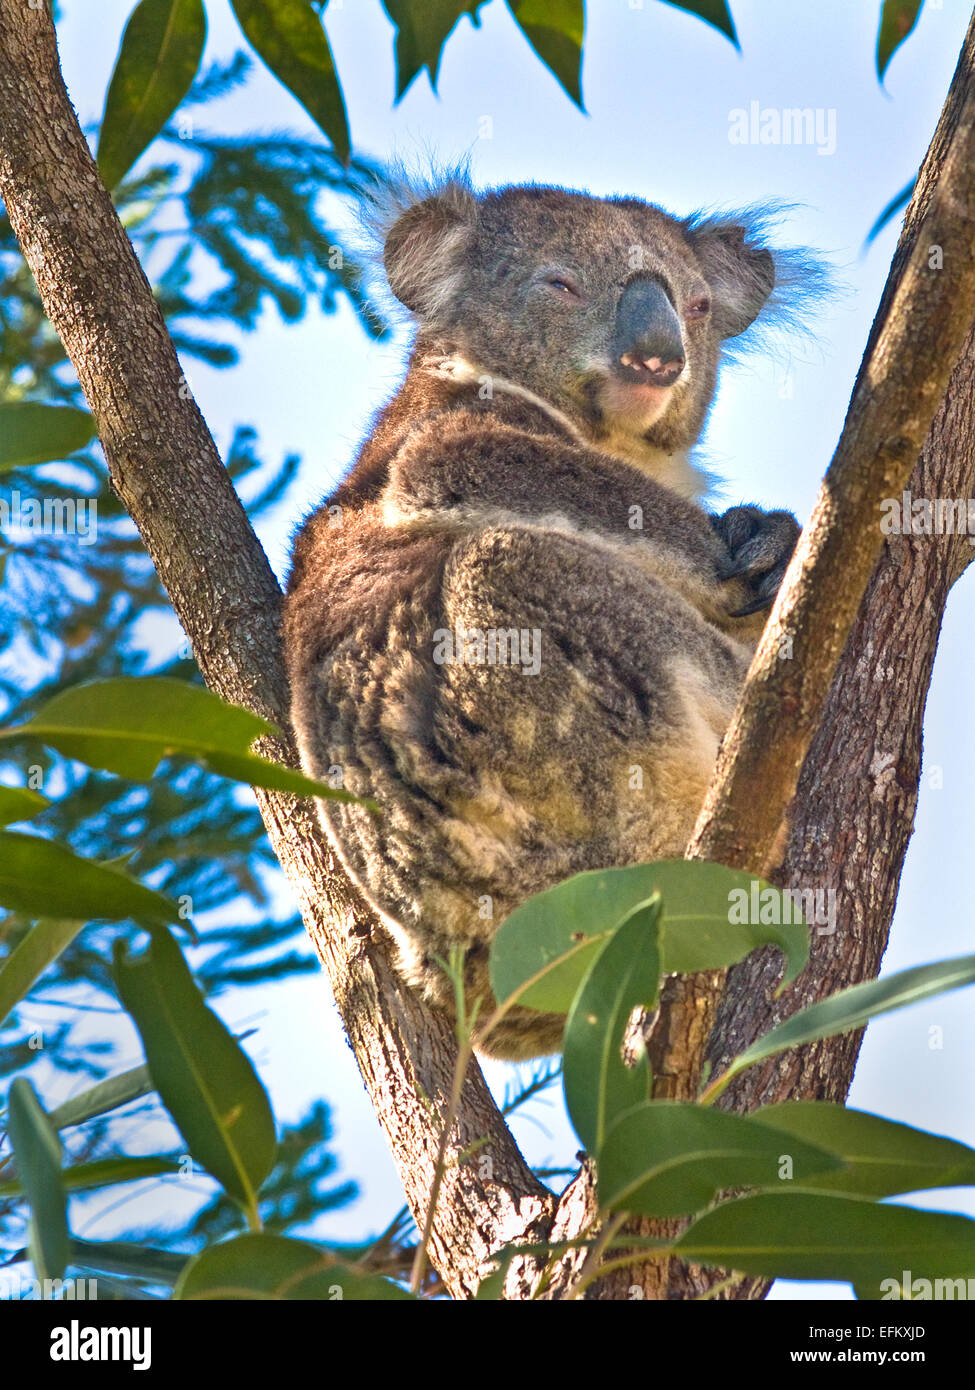 Australia: Koala (Phascolarctus cinereus) nella struttura ad albero Foto Stock